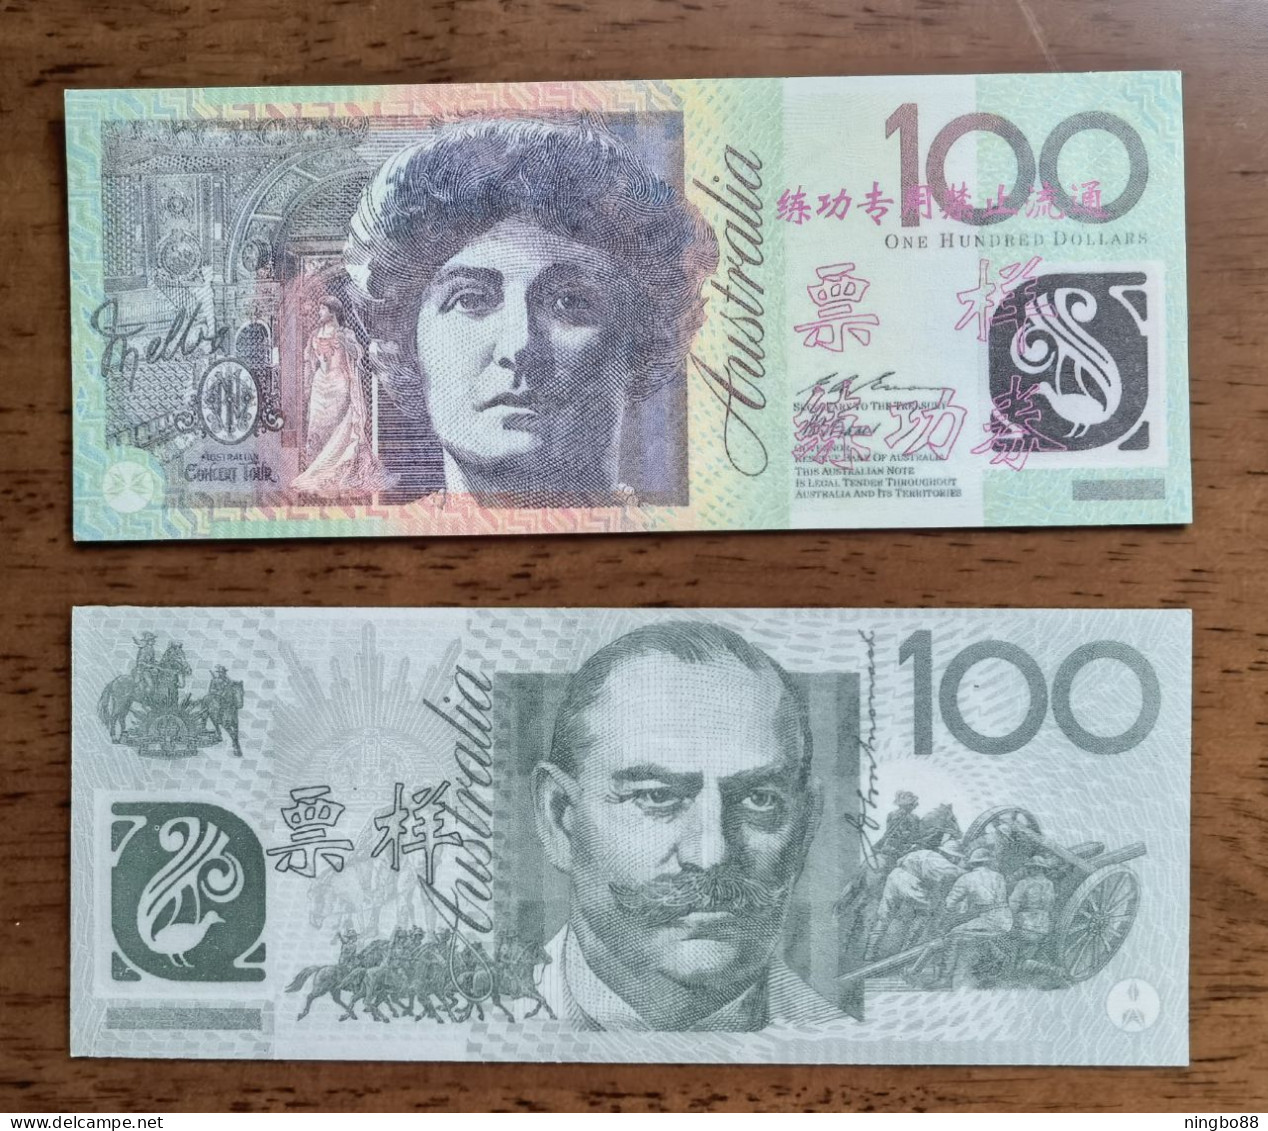 China BOC Bank (bank Of China) Training/test Banknote,AUSTRALIA B-2 Series 100 Dollars Note Specimen Overprint - Vals En Specimen